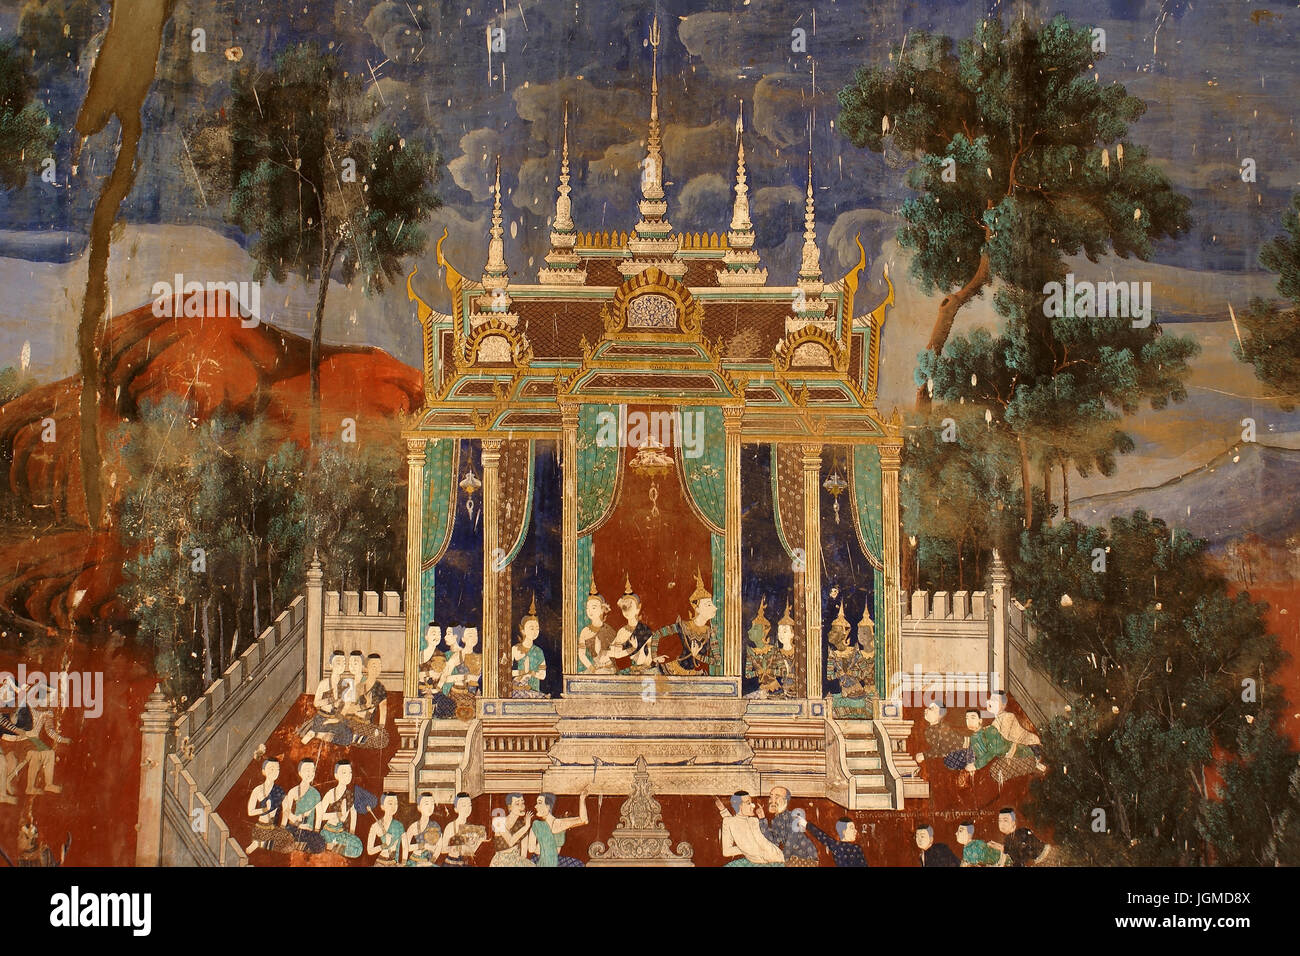 Cambodia, painting in the royal palace in Pnom Penh, , Kambodscha, Malerei im koeniglichen Palast in Pnom Penh Stock Photo